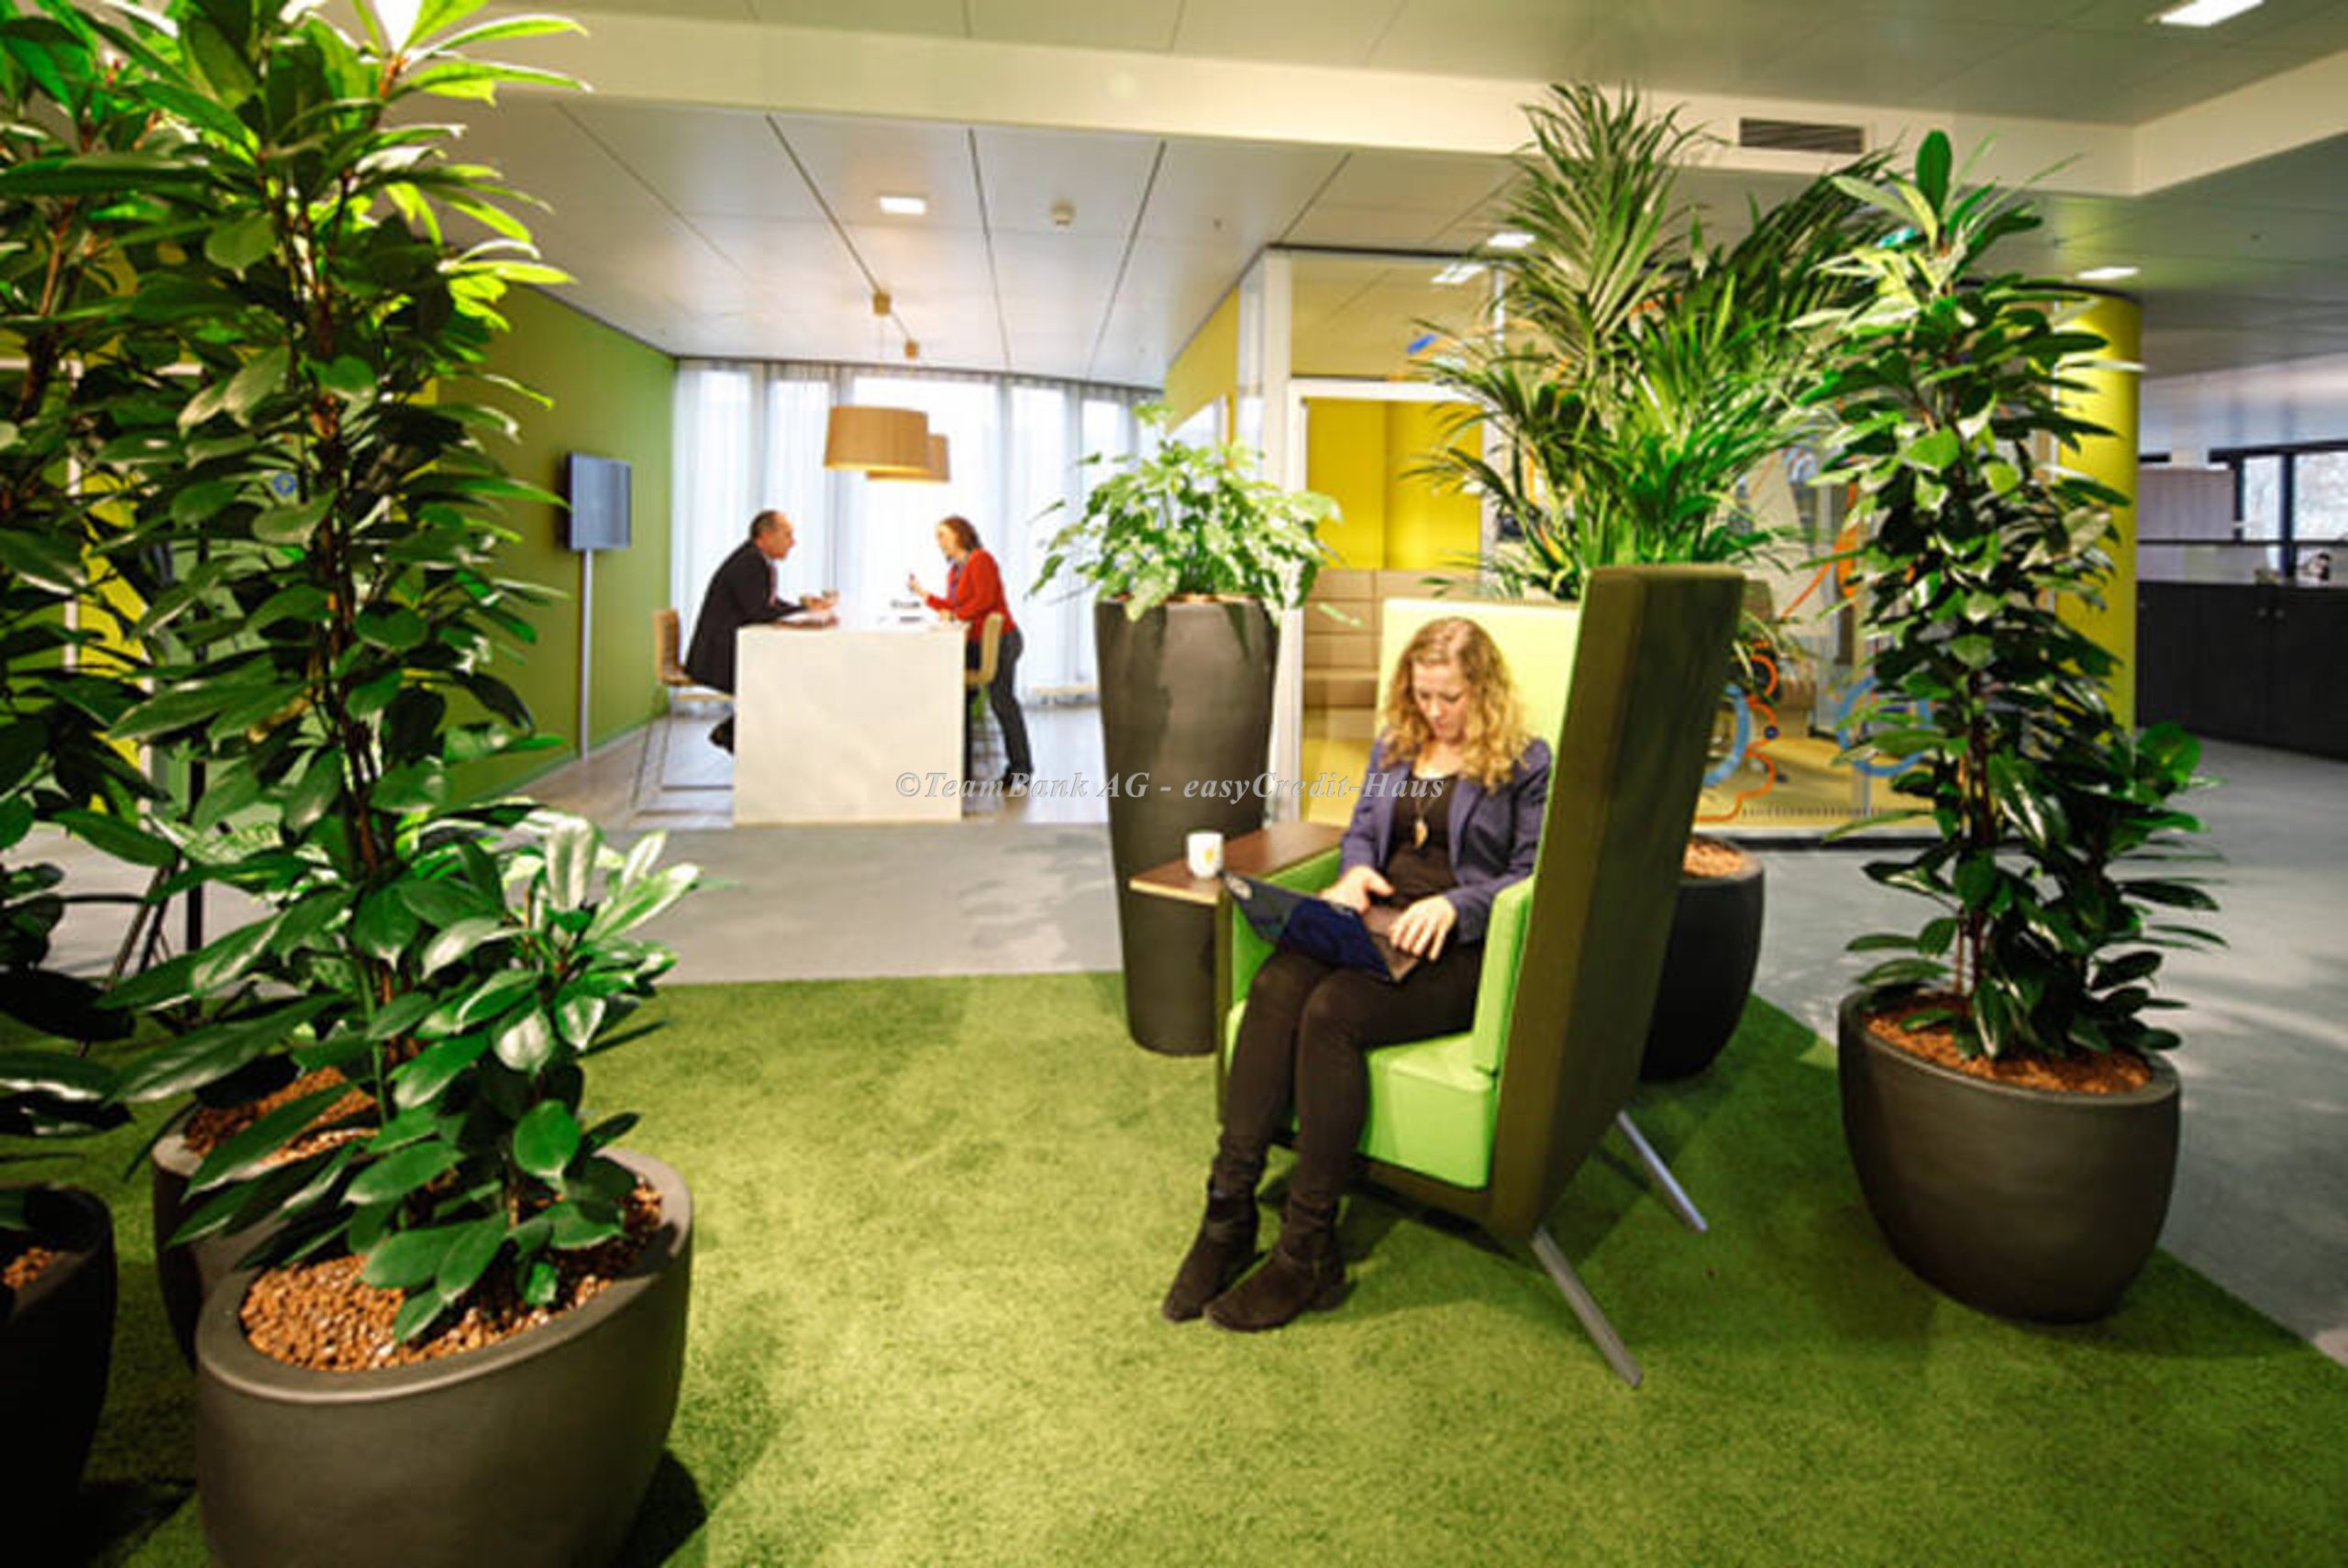 Innenraumbegrünung: Büropflanzen bei EasyCredit bzw. Teambank. Hier mit Lounge-Sessel und Pausenraum.